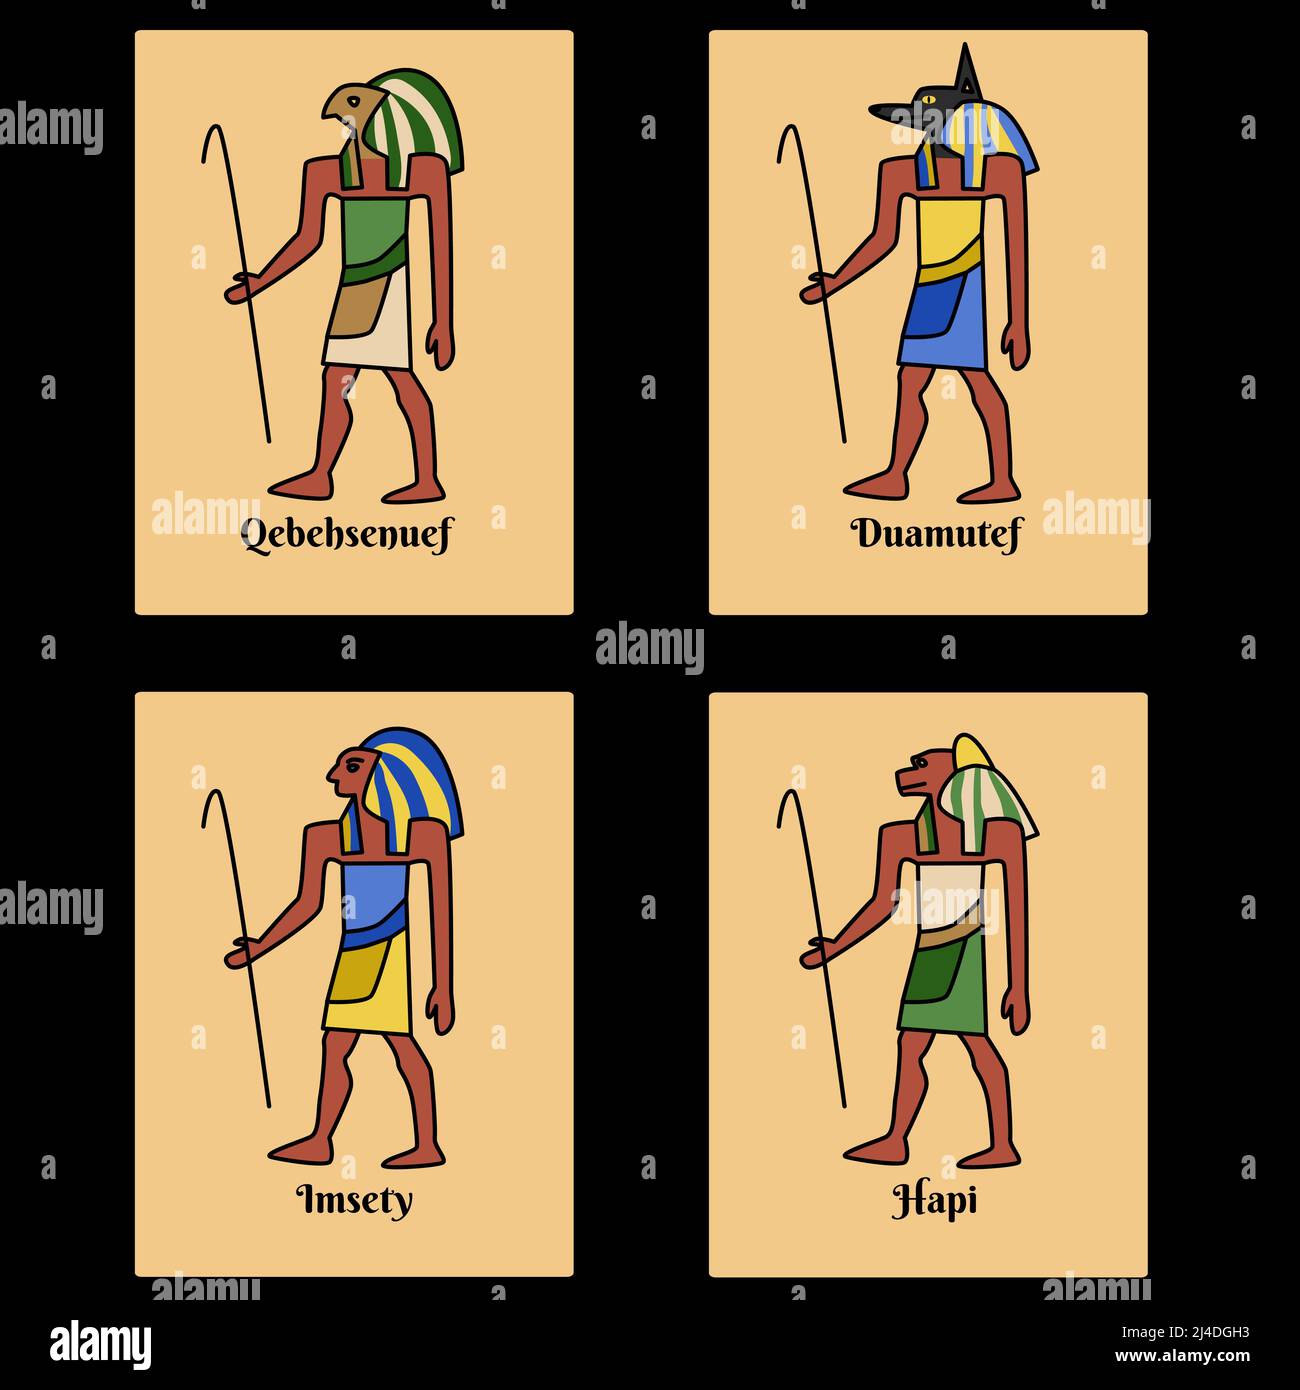 Alte Ägypten Karten gesetzt, gott Horus Söhne stilisierte Bilder und Namen Skript. Vier Götter Schakal, Falke, Mensch, Cynocephalus. Kanopiegläser Wächter Vektor i Stock Vektor